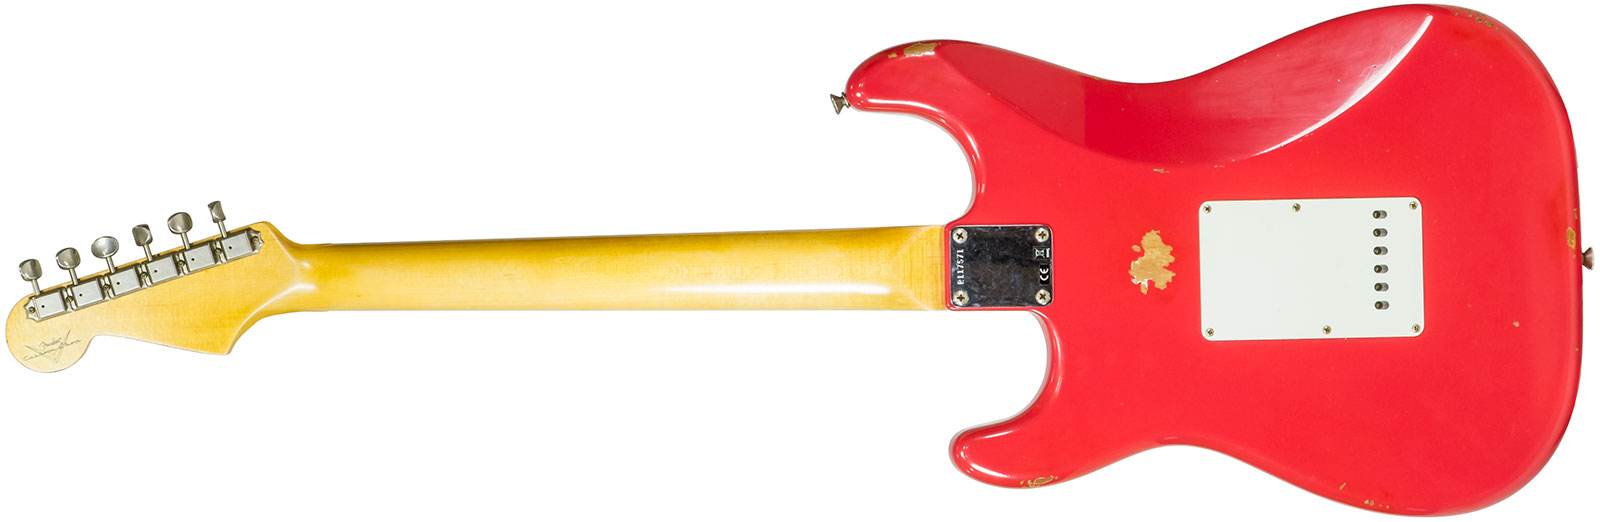 Fender Custom Shop Strat 1963 3s Trem Rw #r117571 - Relic Fiesta Red - Guitarra eléctrica con forma de str. - Variation 1